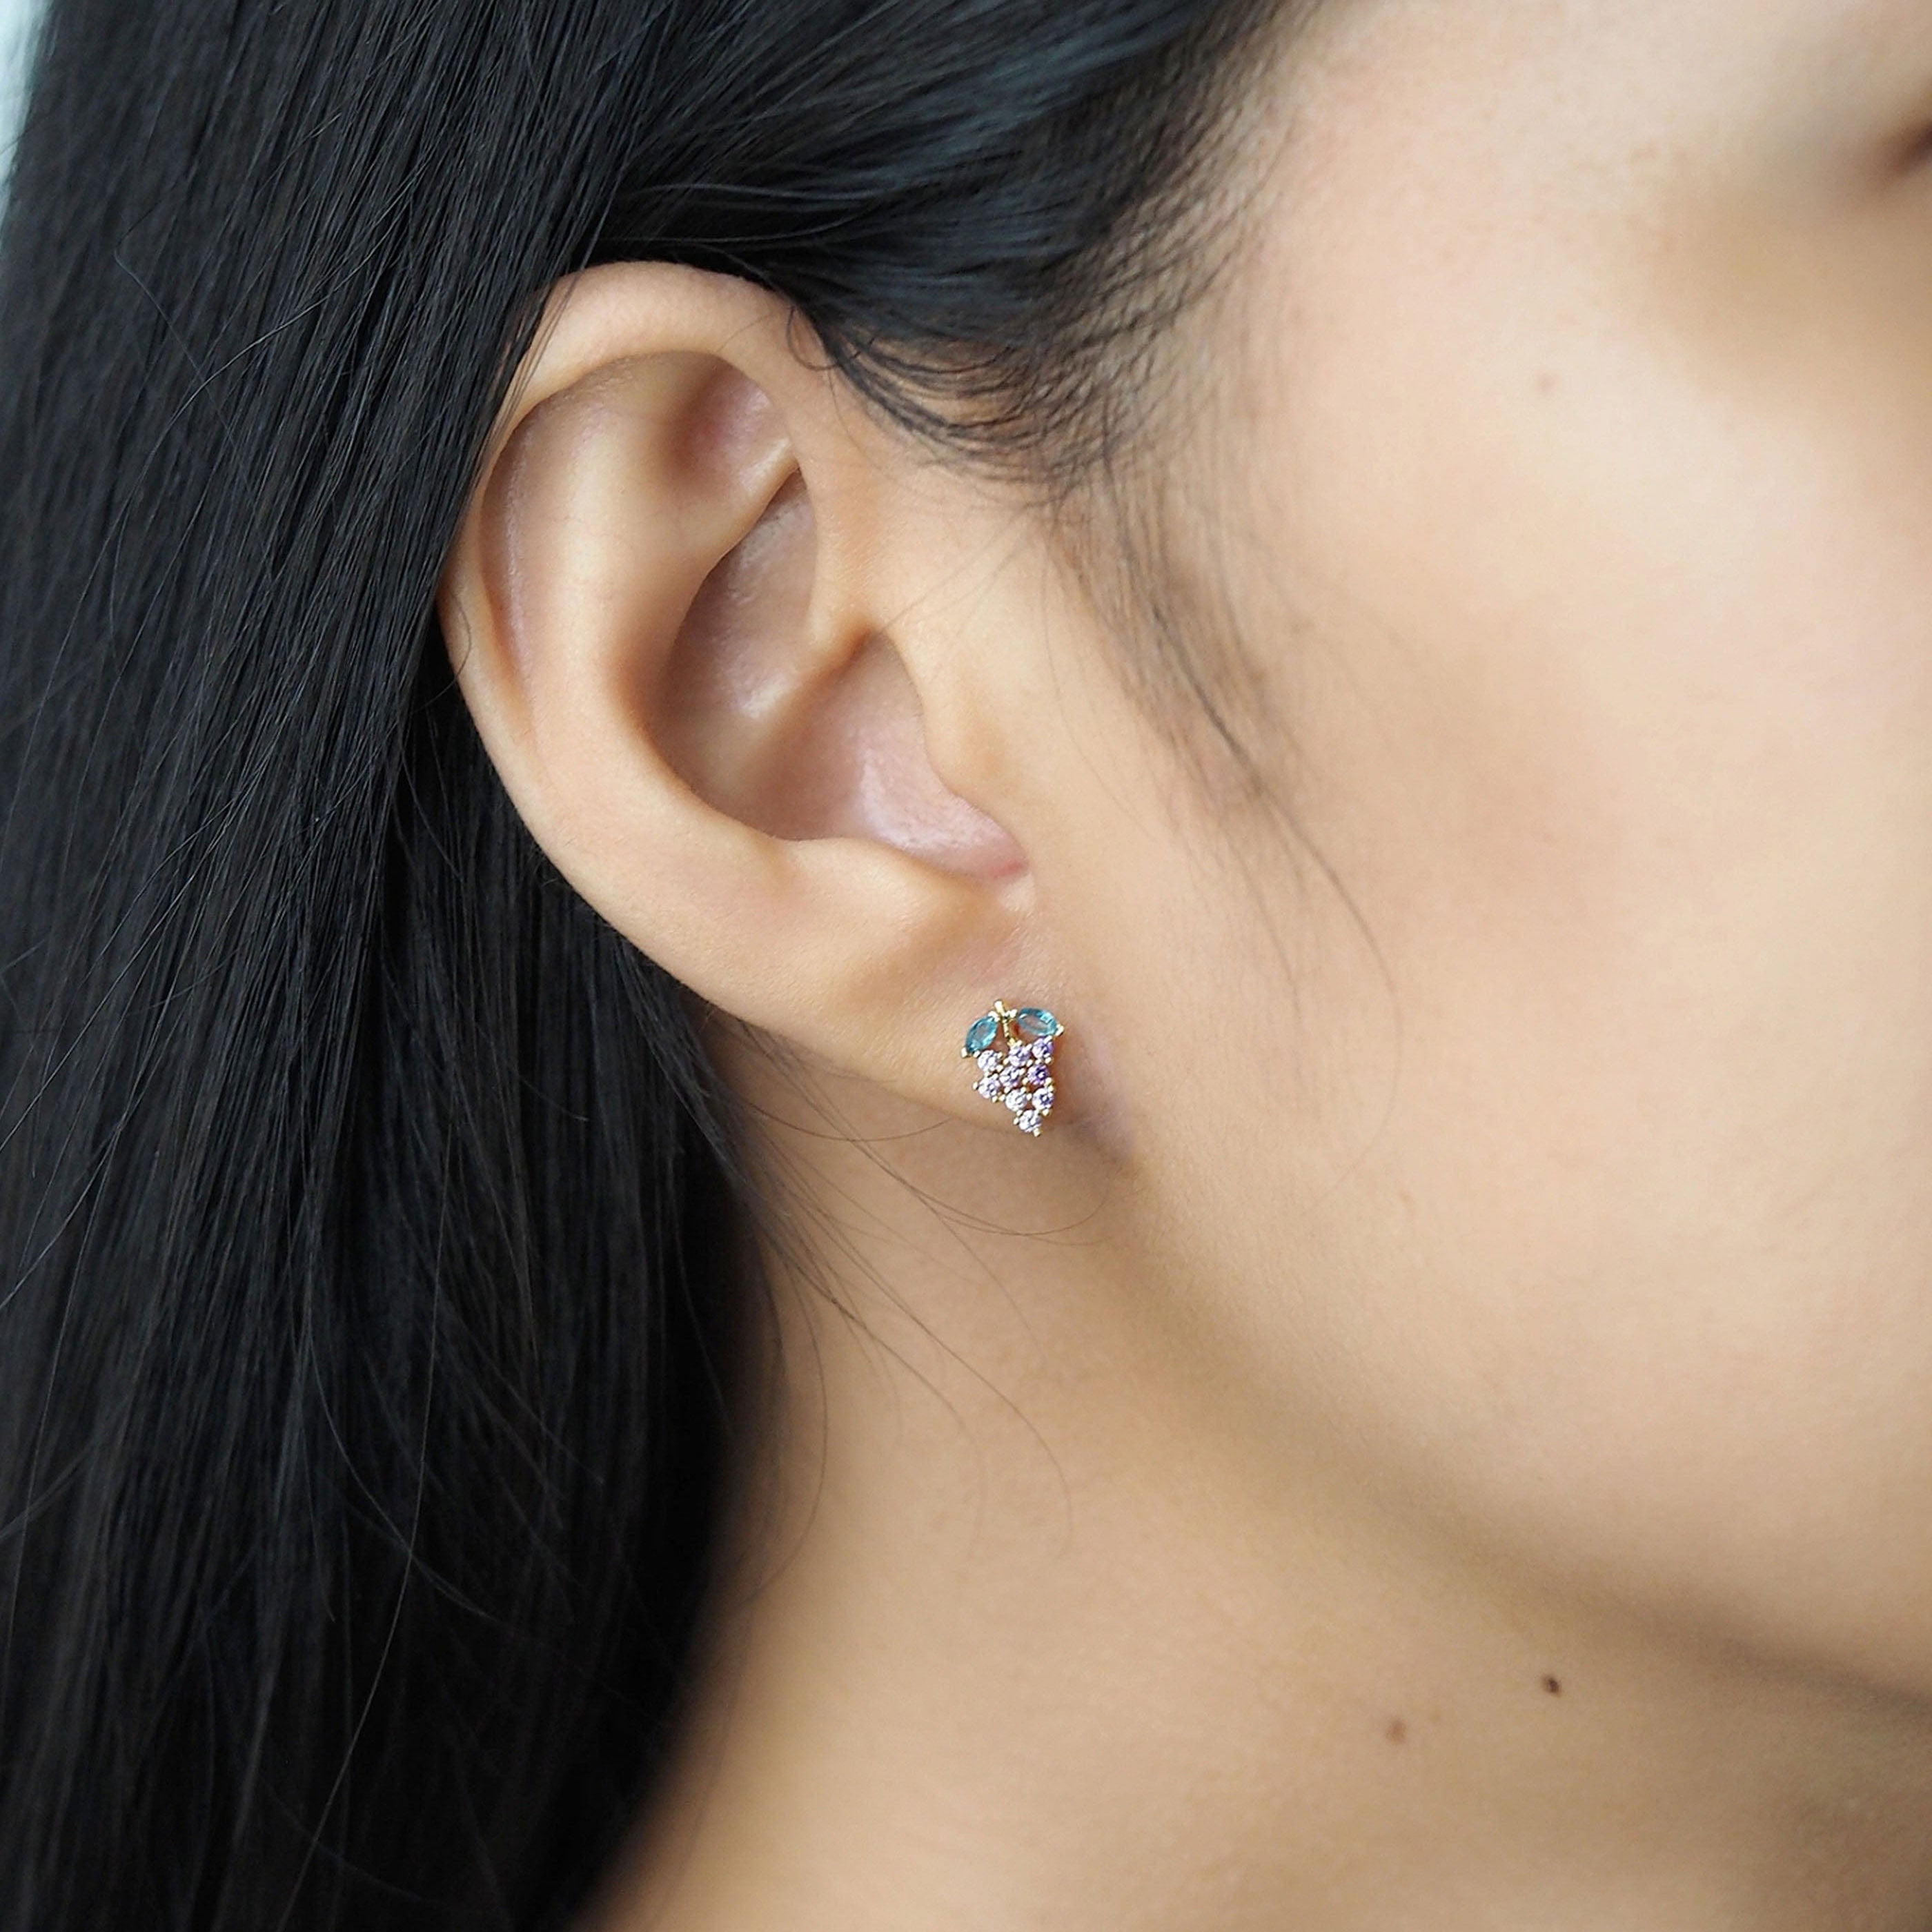 TAI JEWELRY Earrings Grape Studs